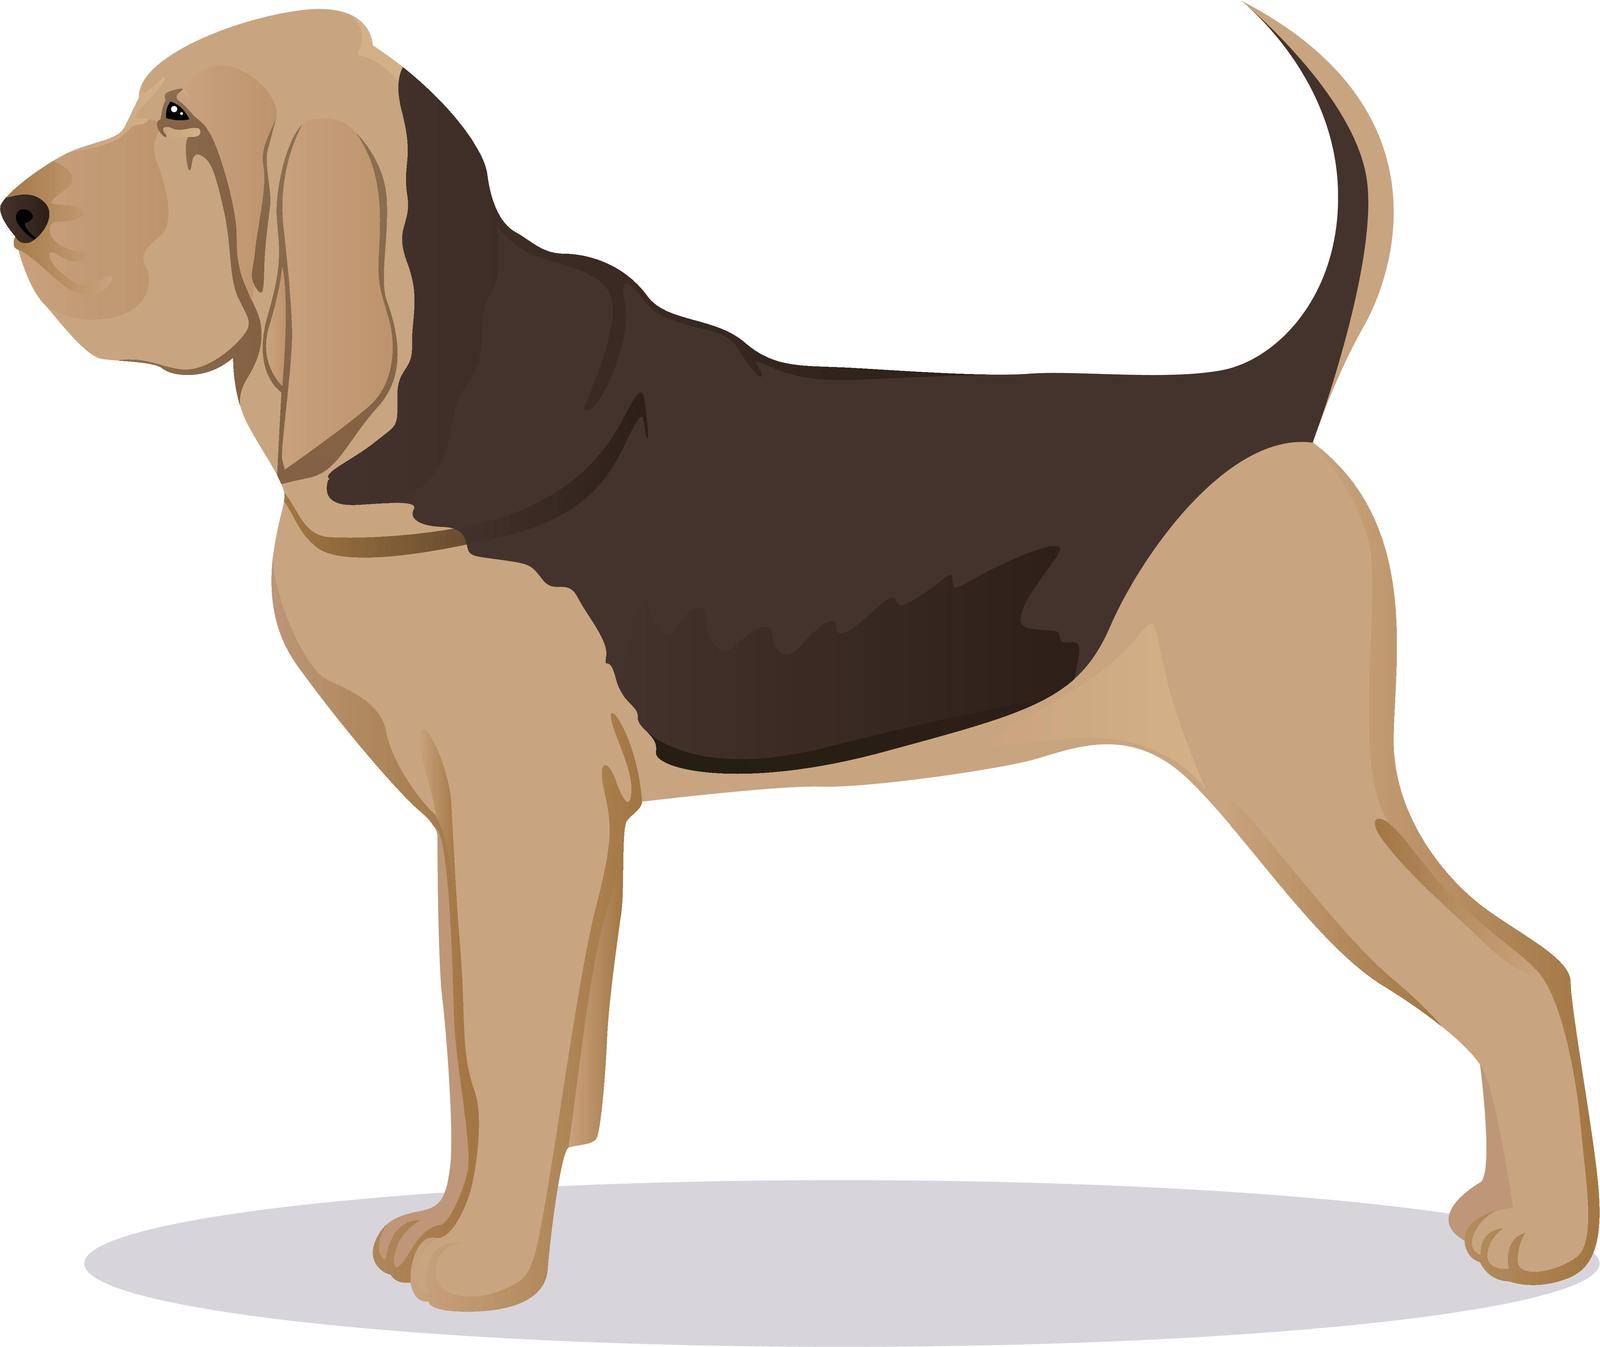 Bloodhound dog by Marishkayu